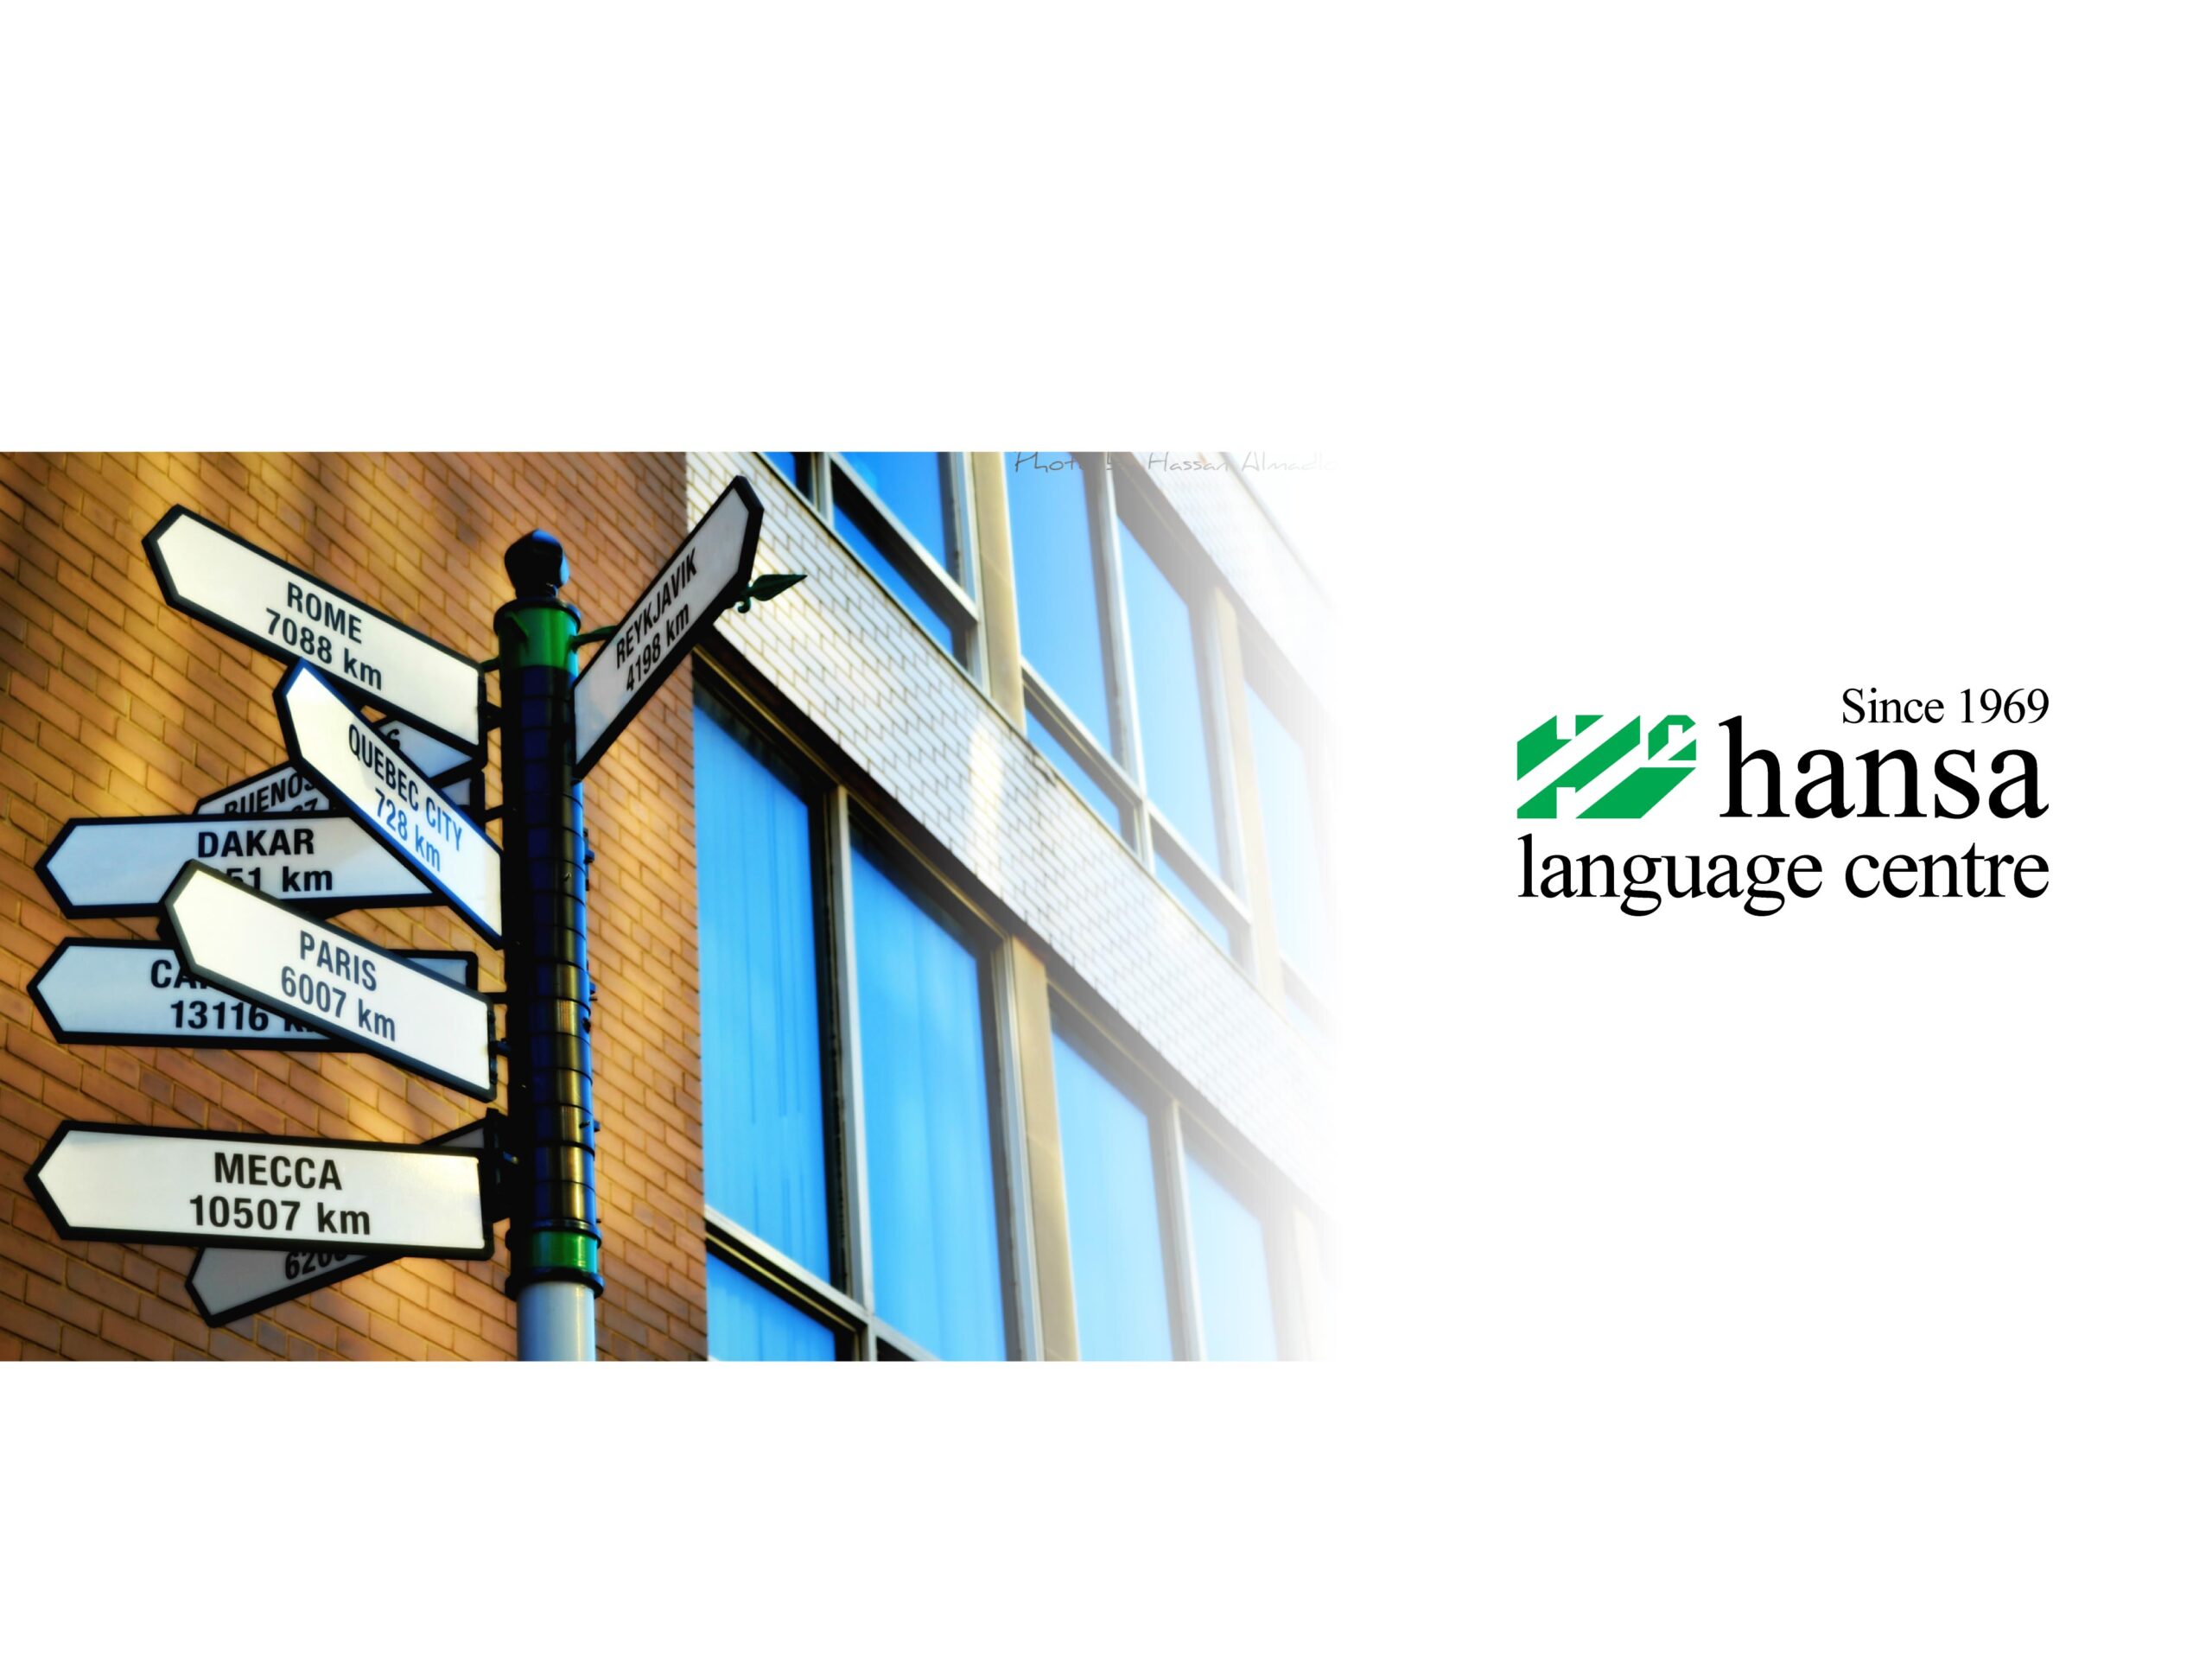 Hansa Language Centre logo & Street sign in front of the Hansa Yonge campus